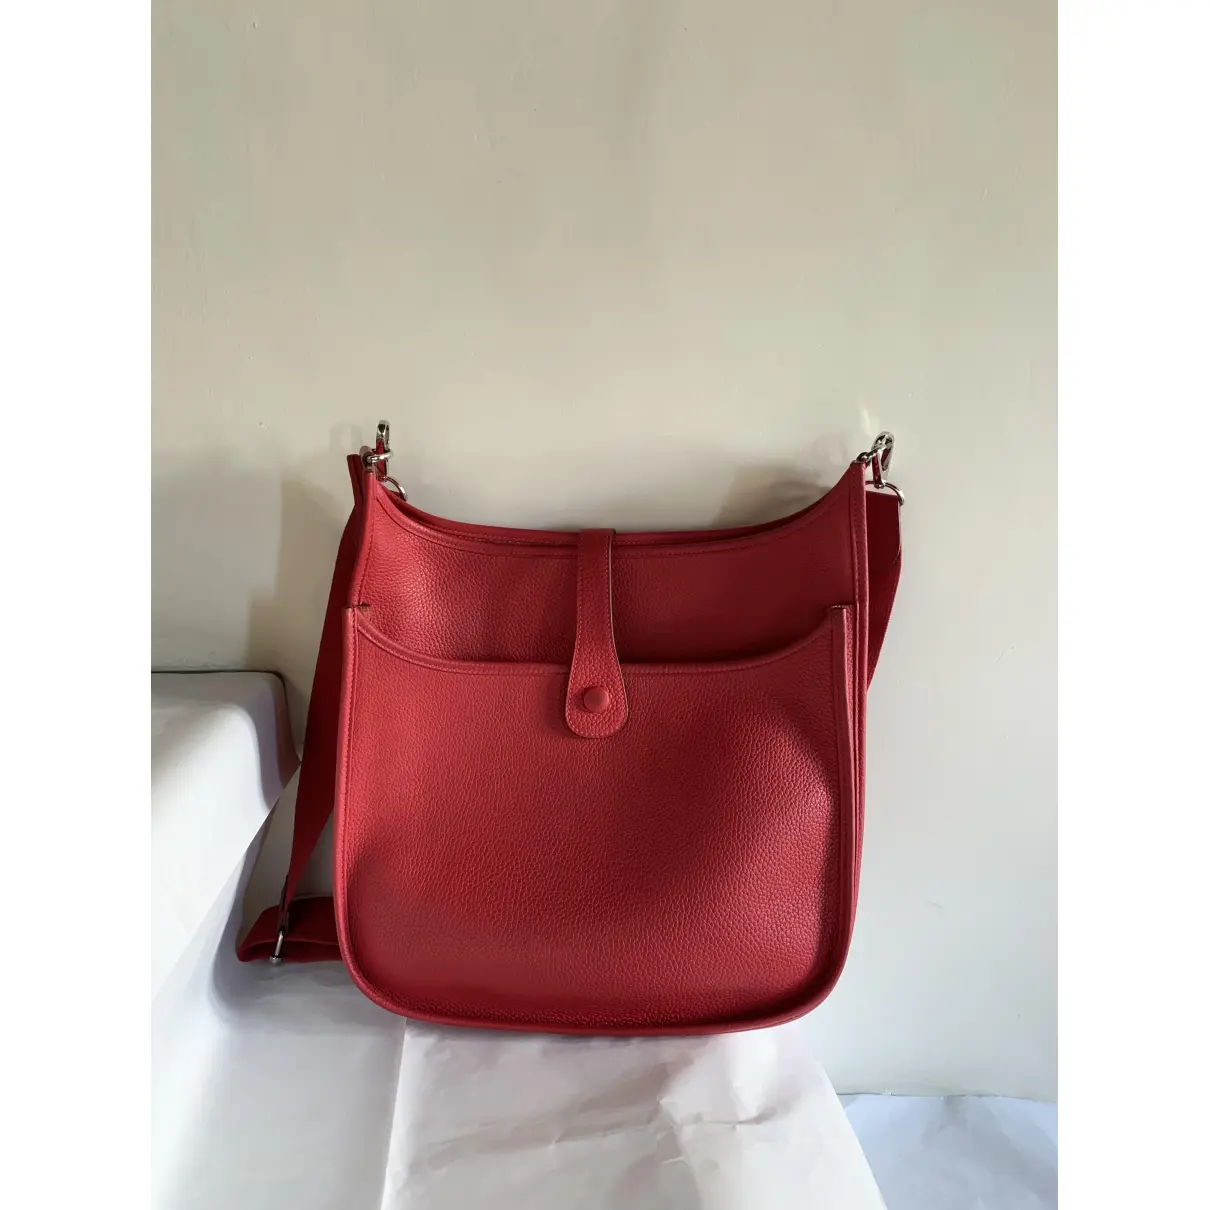 Buy Hermès Evelyne Sellier leather handbag online